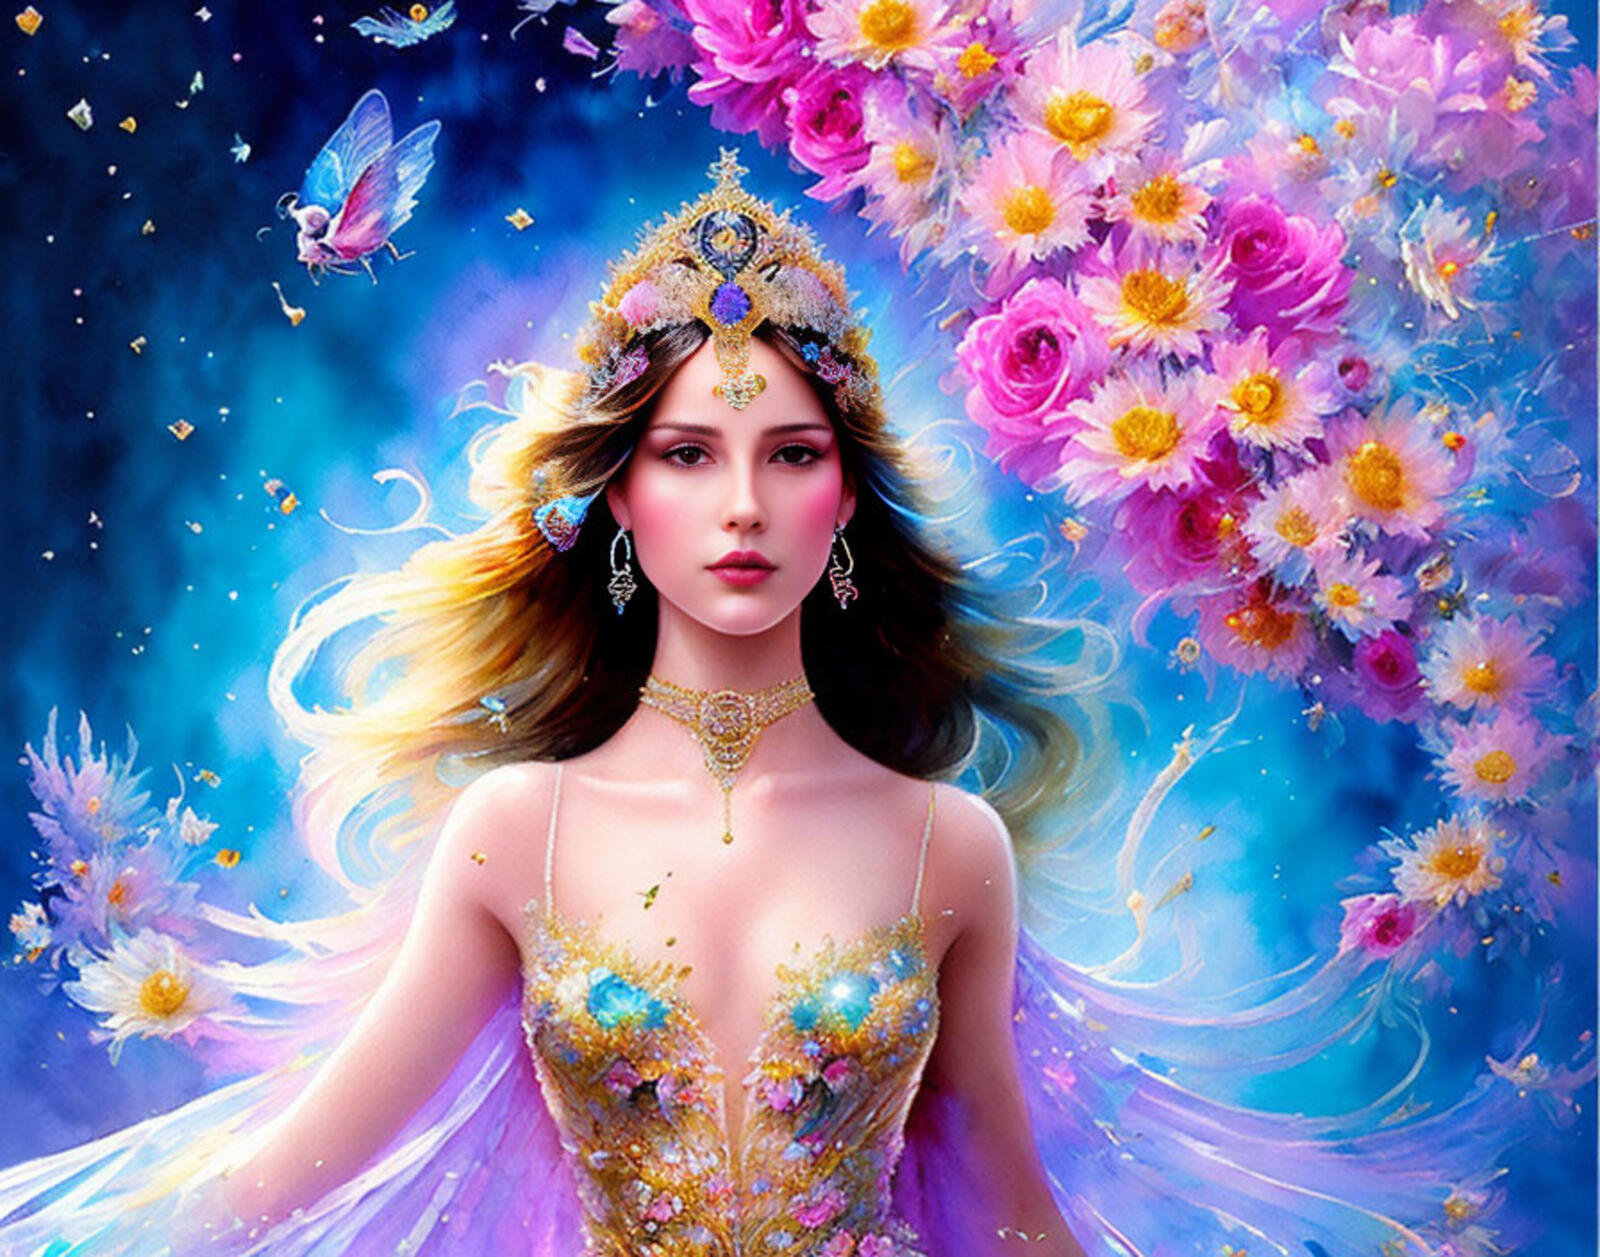 Бесплатное фото Рисунок девушки принцессы на фон небо с цветами